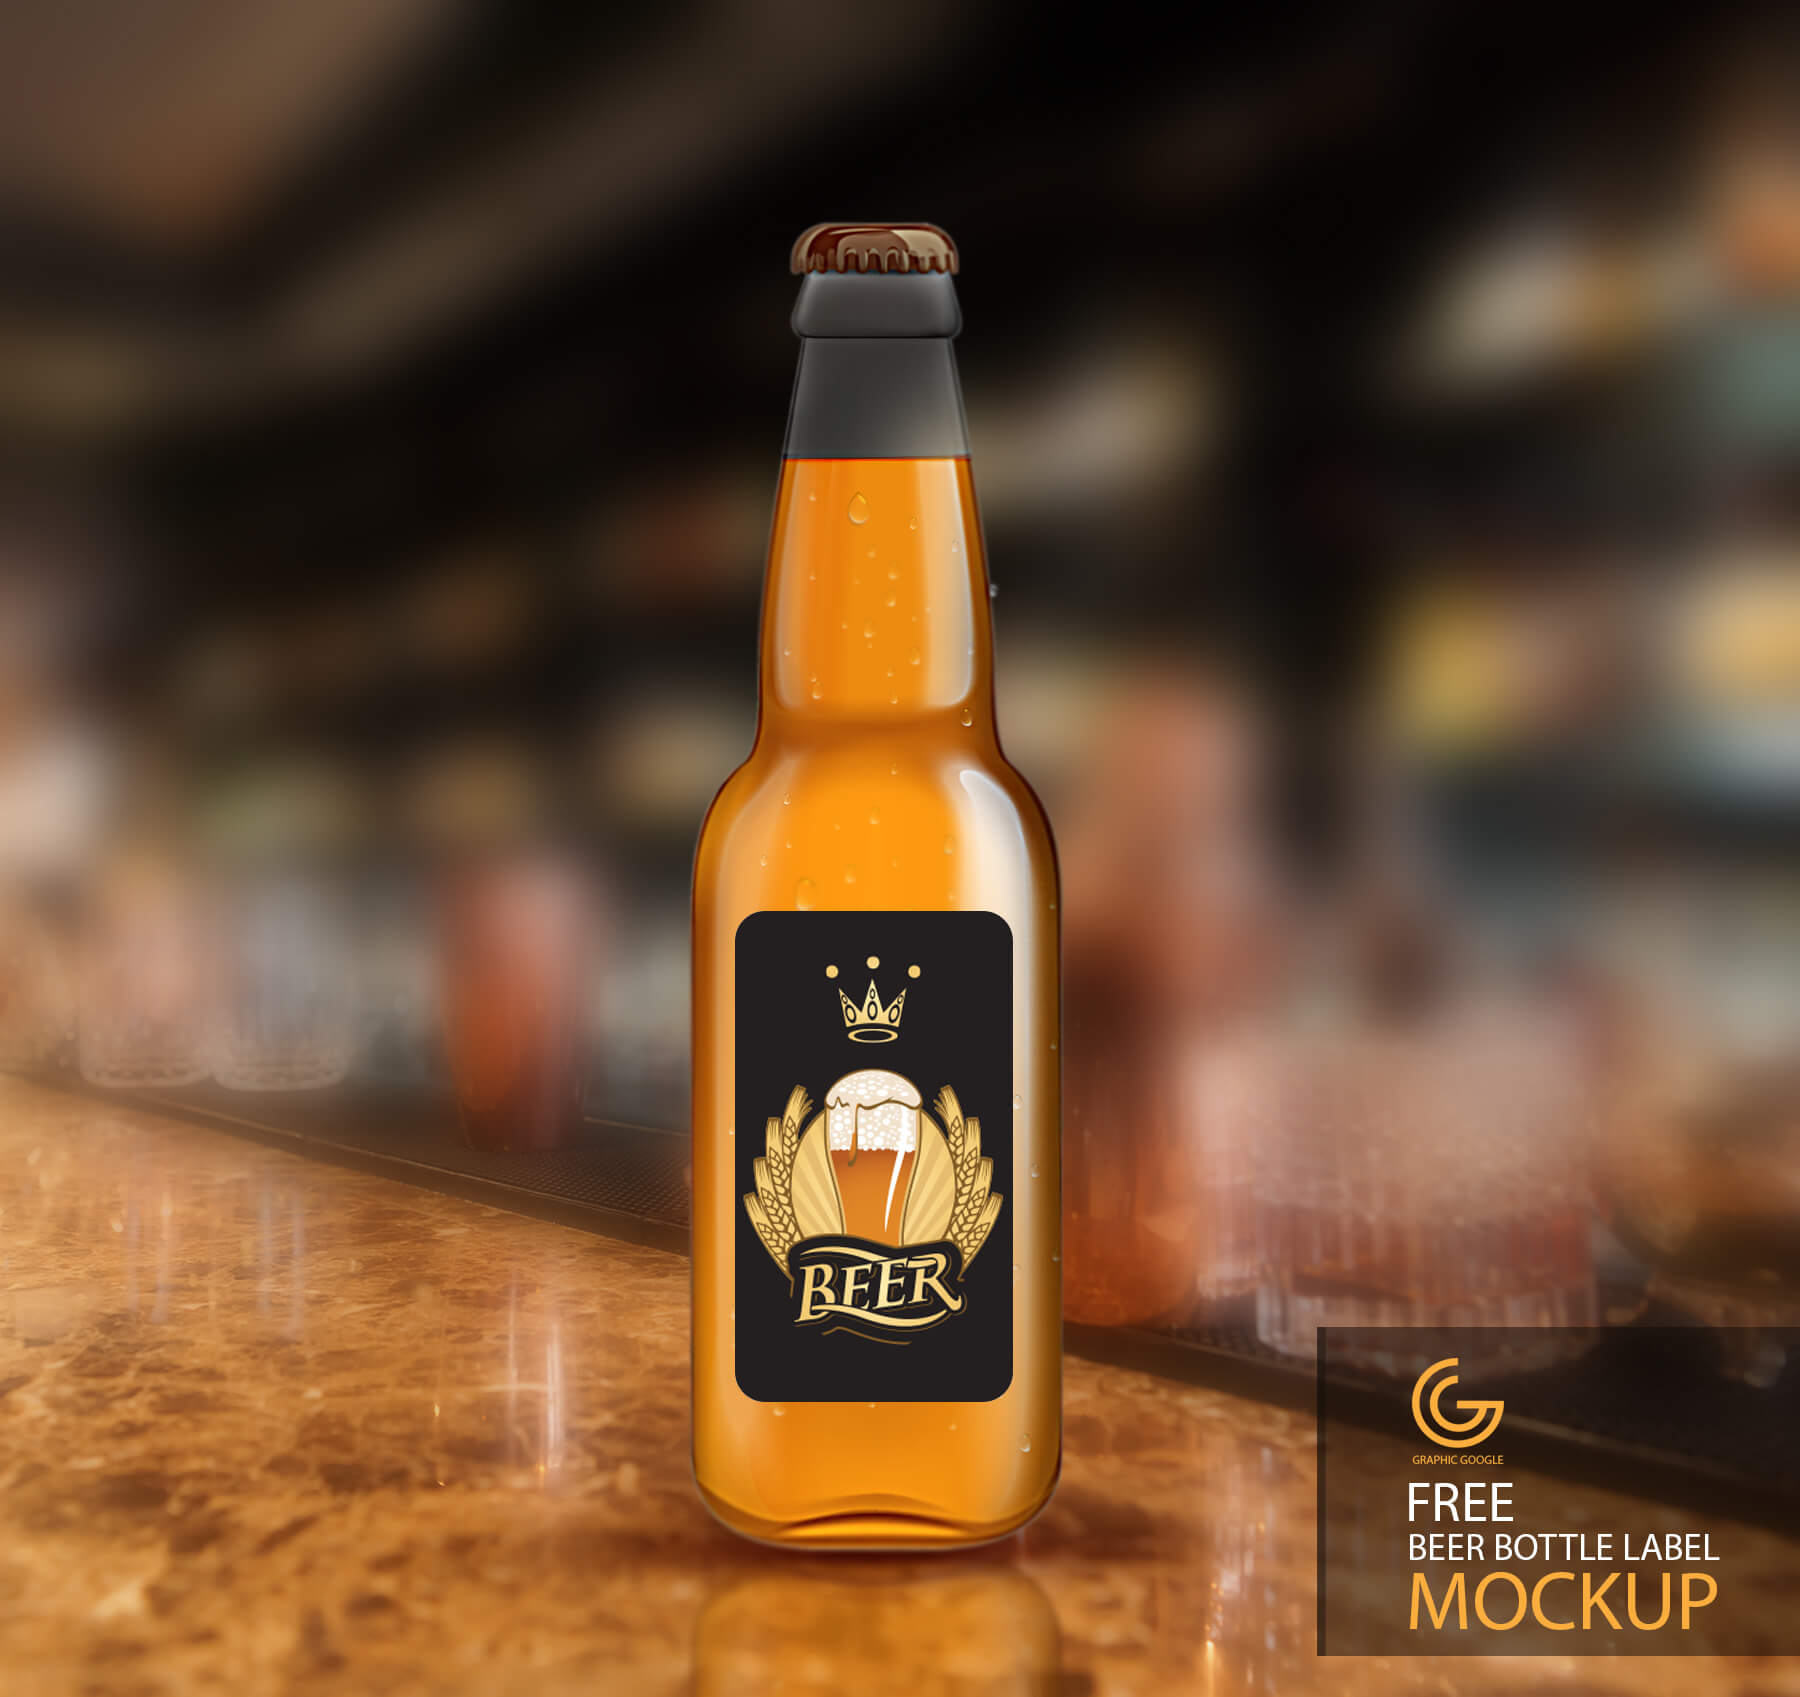 Beer Bottle Label Design Mockup In Psd Download Free Throughout Beer Label Template Psd